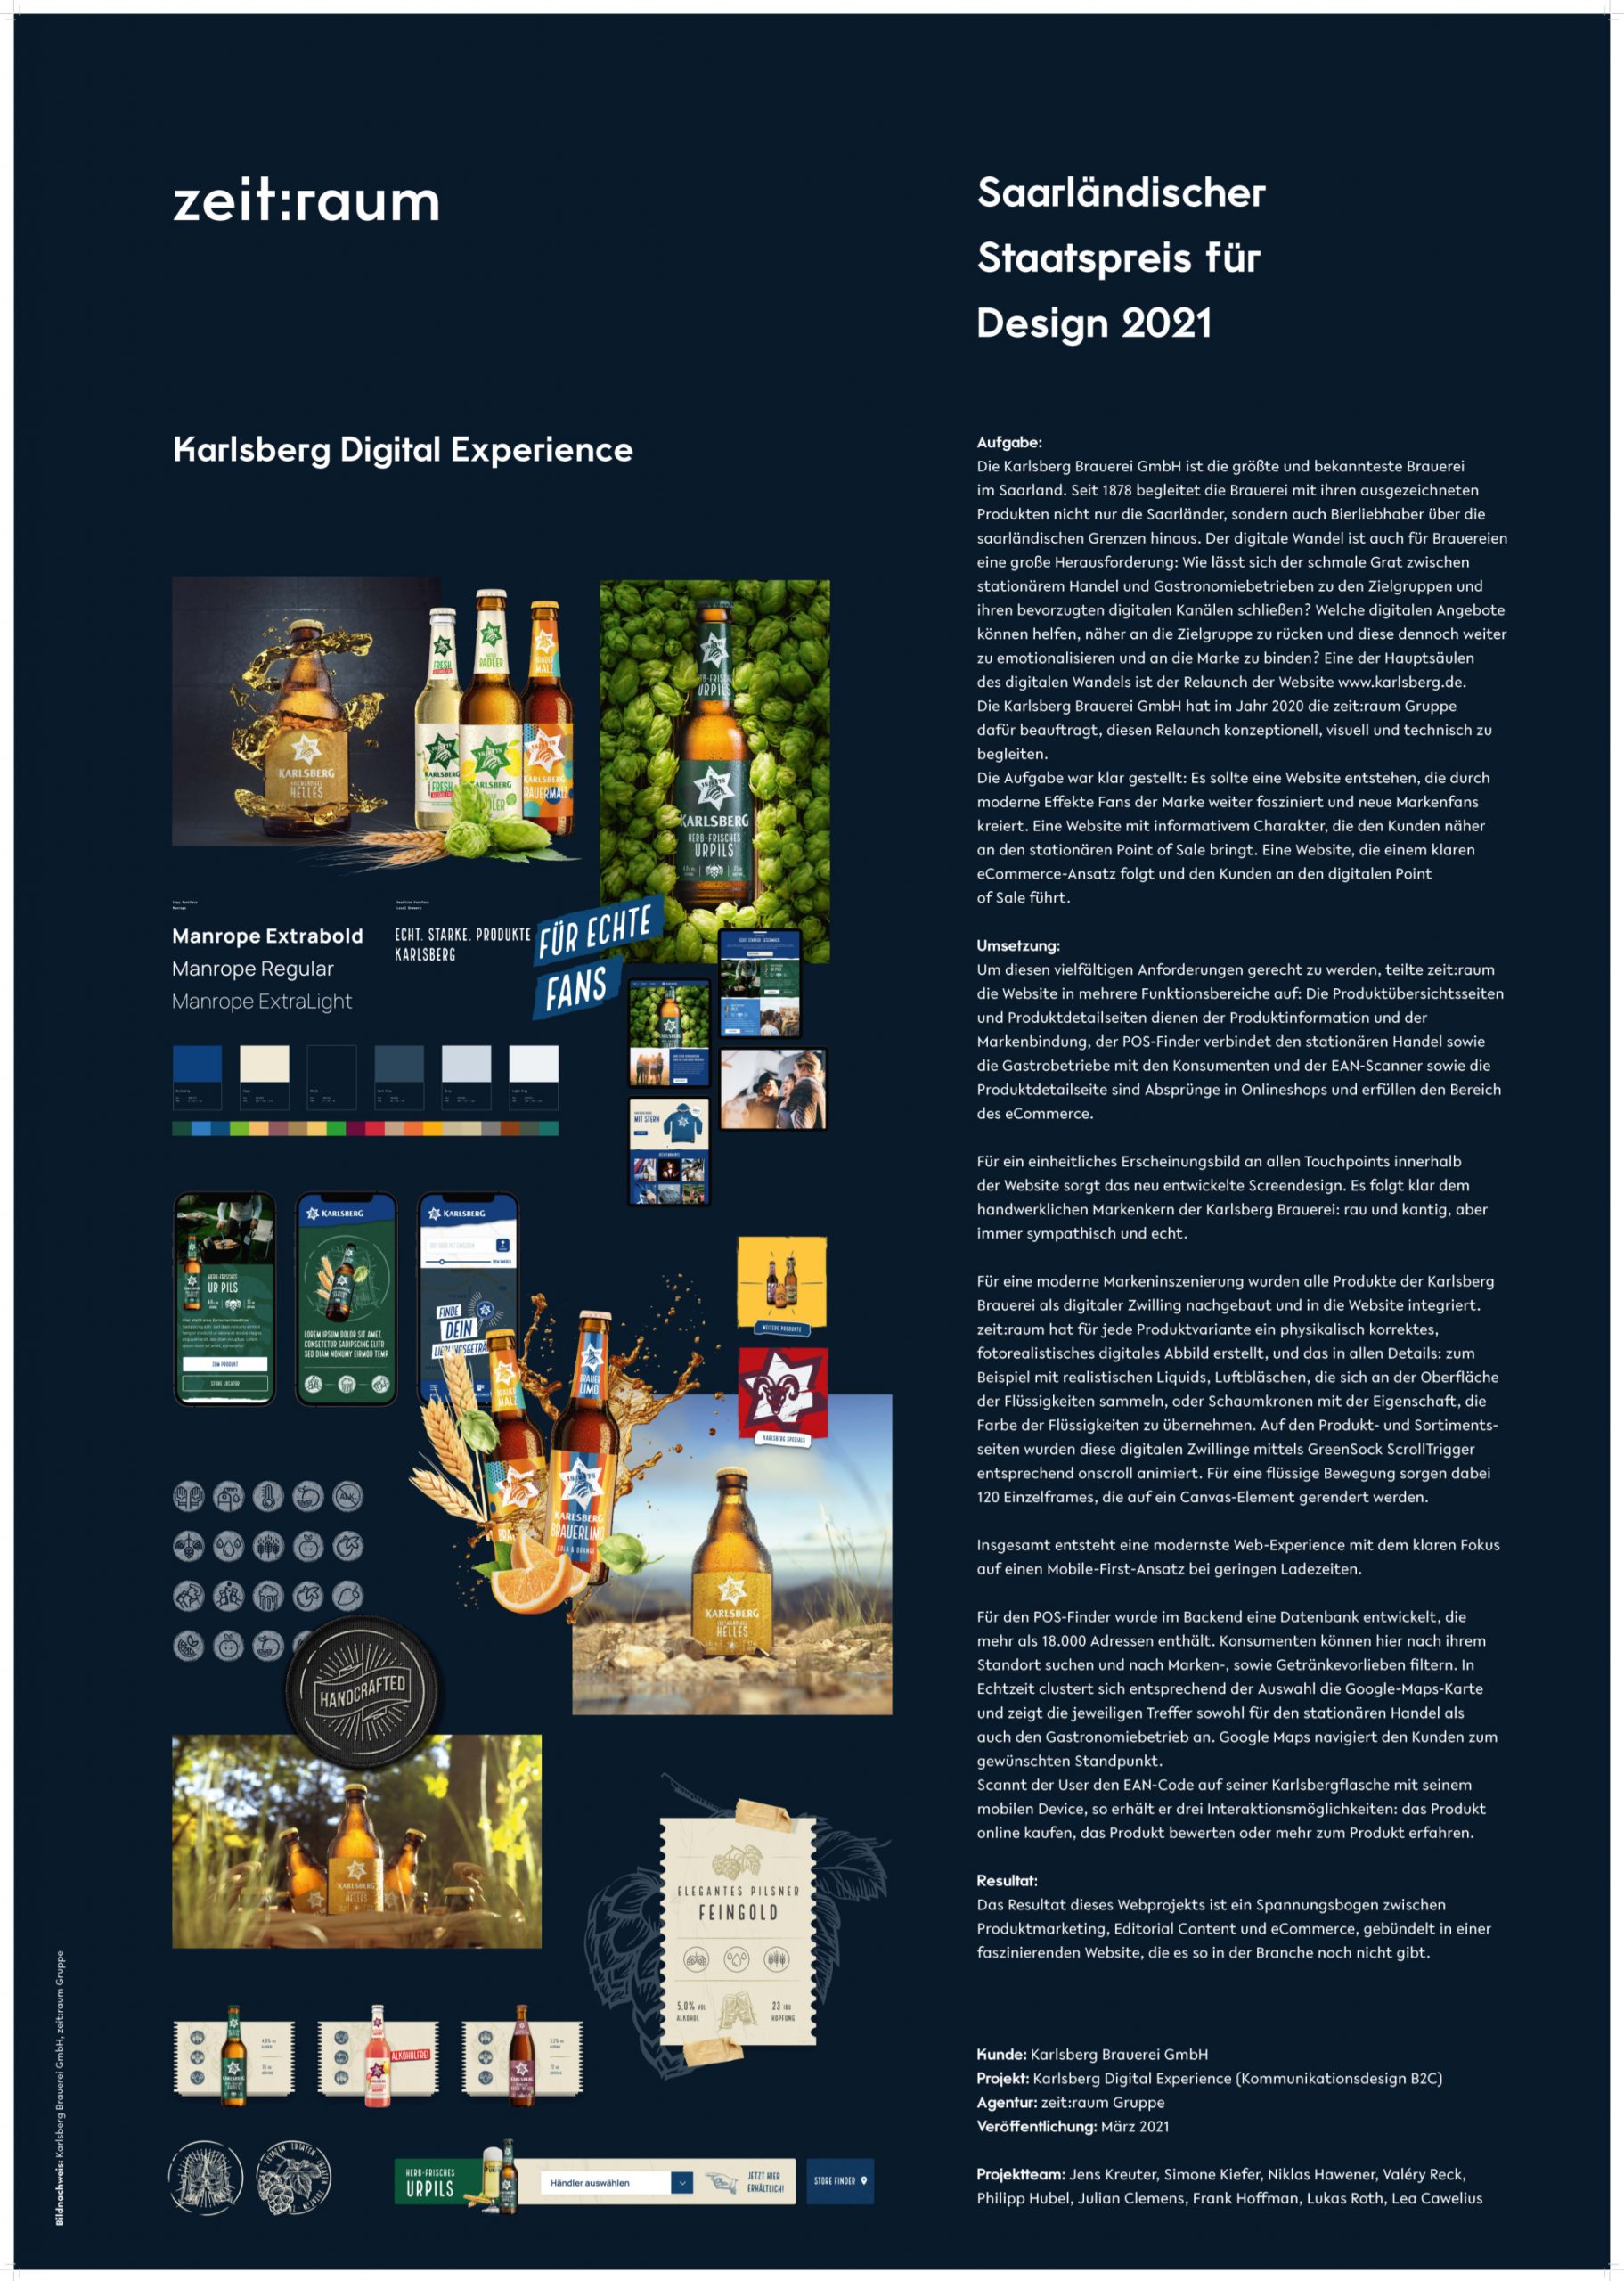 Karlsberg Digital Experience – Preisträger 2021